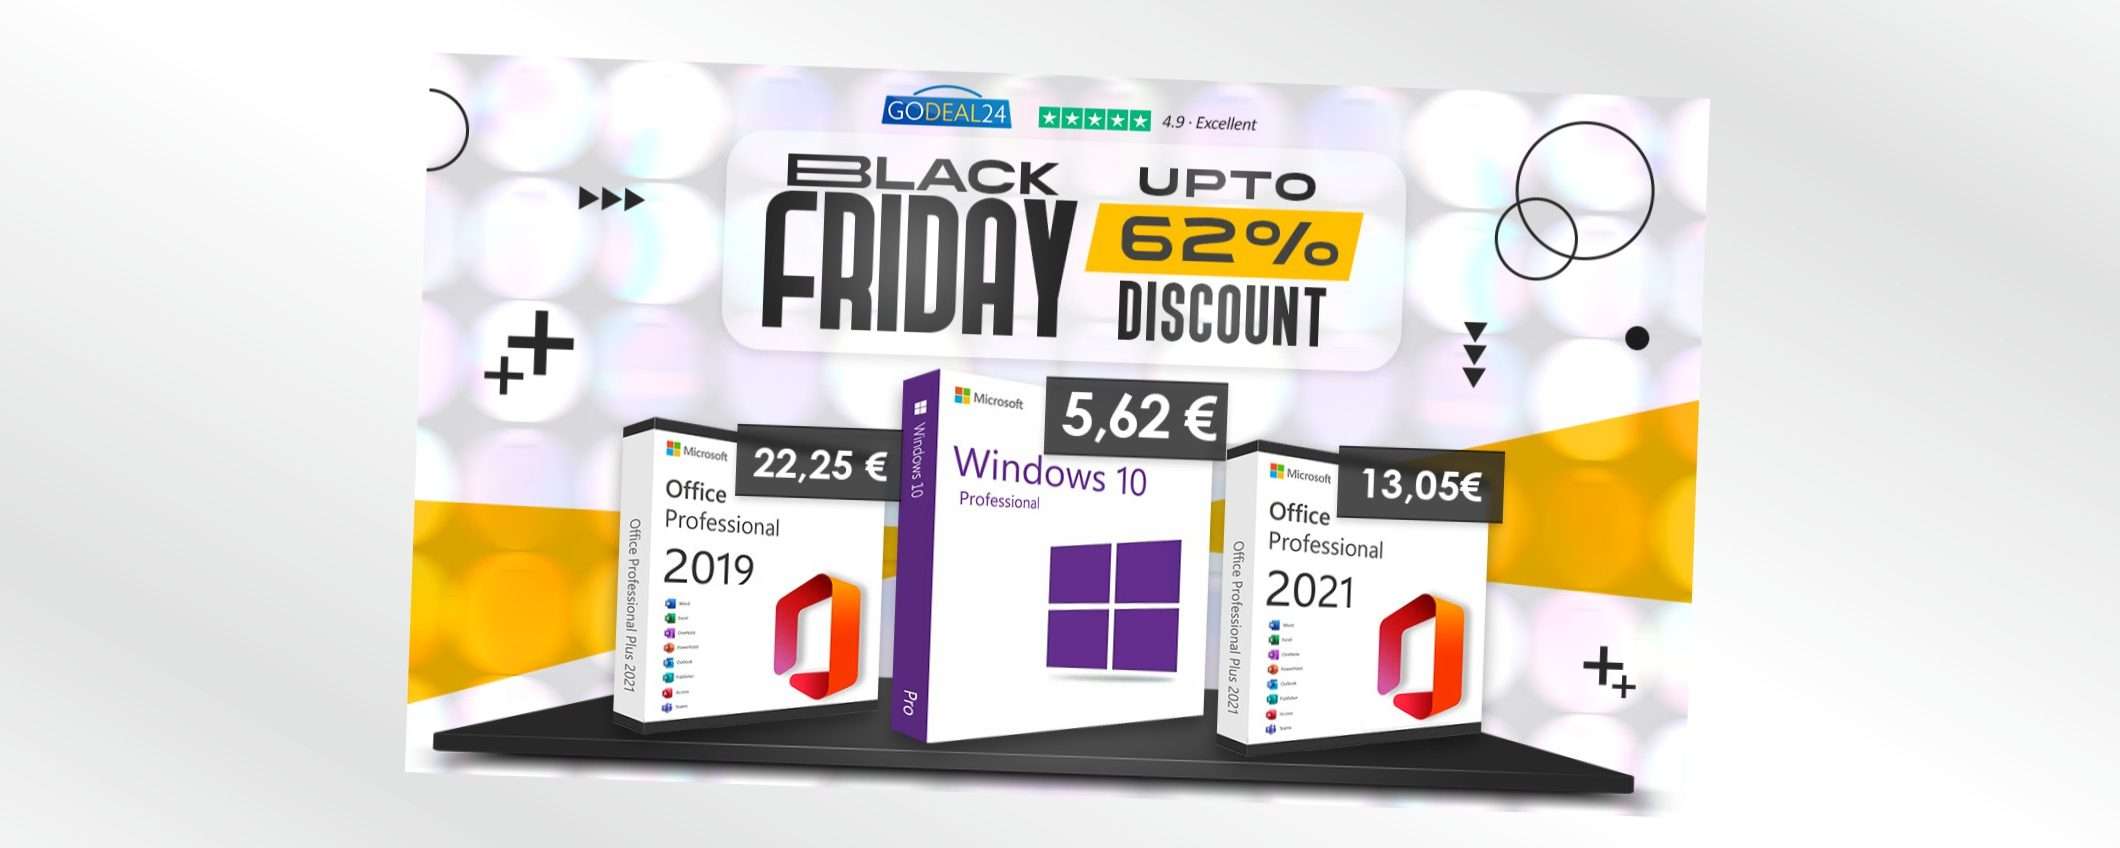 Black Friday Godeal24, prezzi TOP: Windows 10 a 5,62€, Office 2021 a 13,05€!